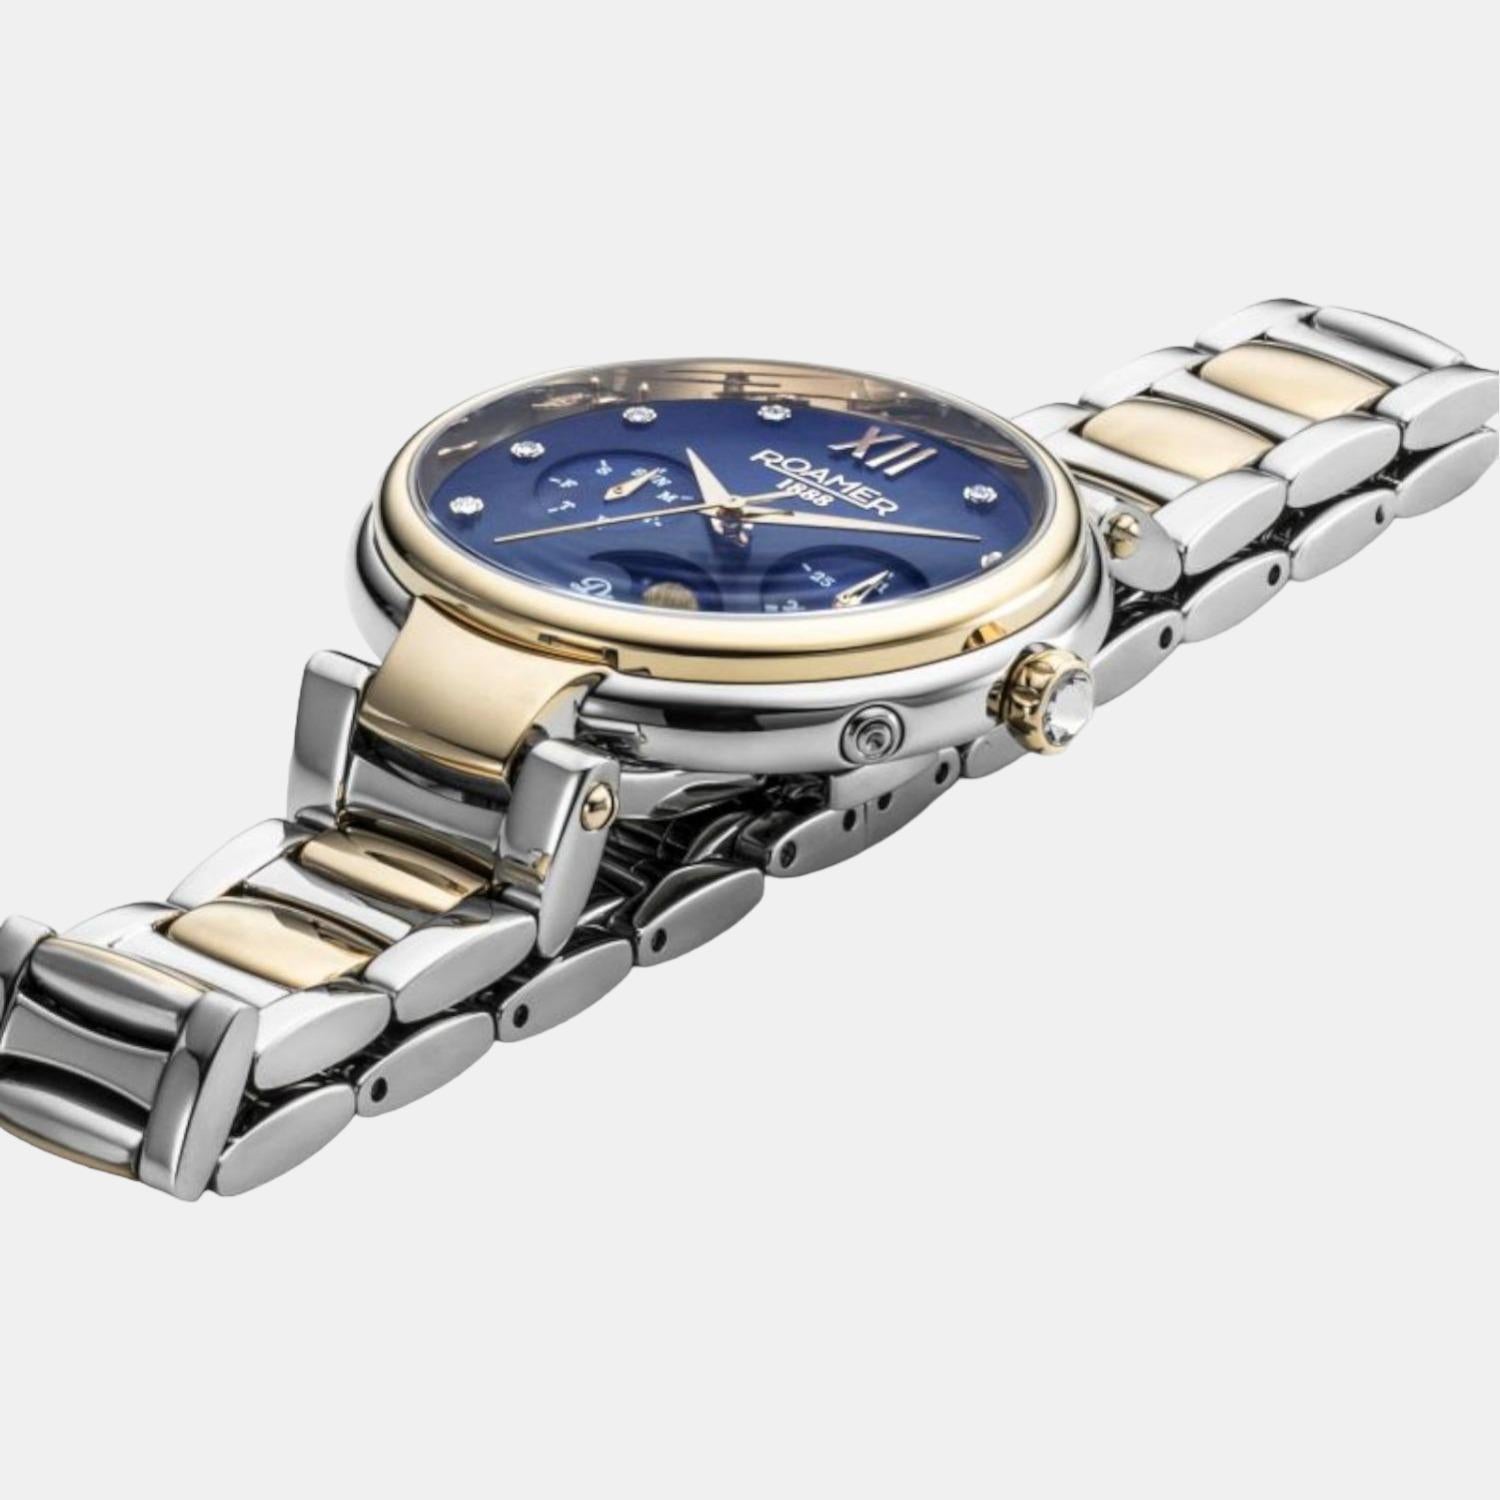 roamer-stainless-steel-blue-analog-female-watch-858801-48-49-50